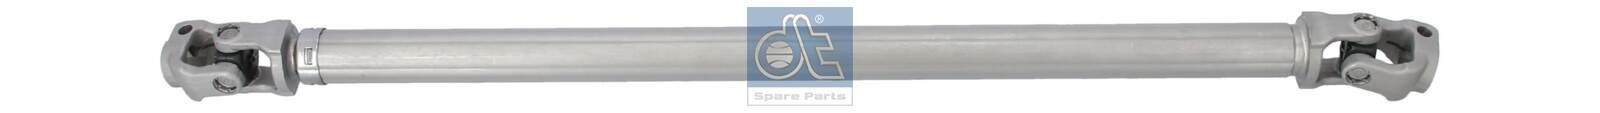 K S00 000 031 DT Spare Parts 2.53265 Steering Shaft 3 175 067